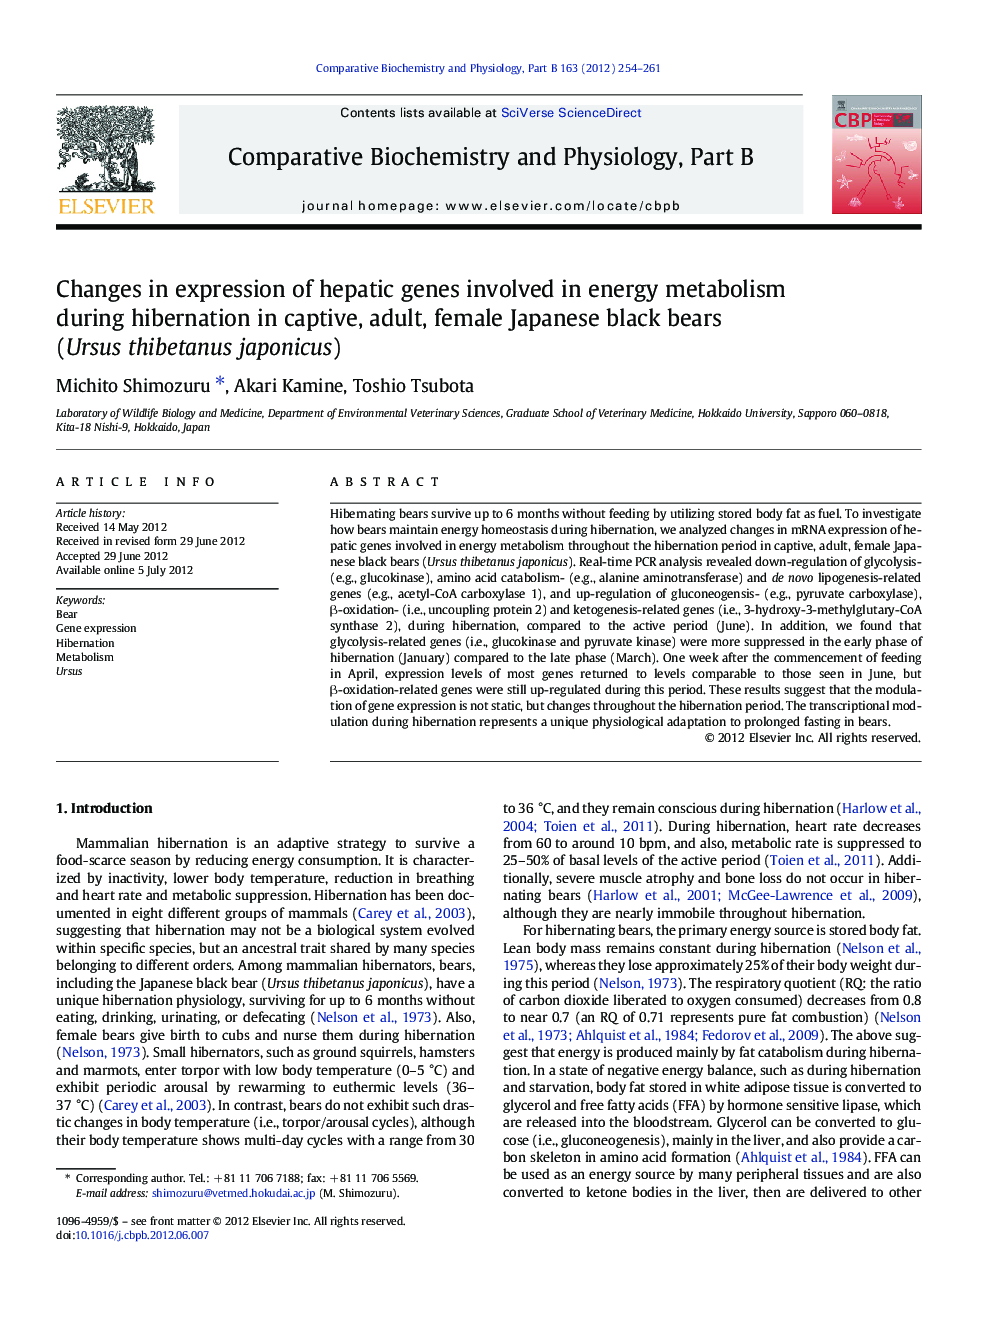 Changes in expression of hepatic genes involved in energy metabolism during hibernation in captive, adult, female Japanese black bears (Ursus thibetanus japonicus)